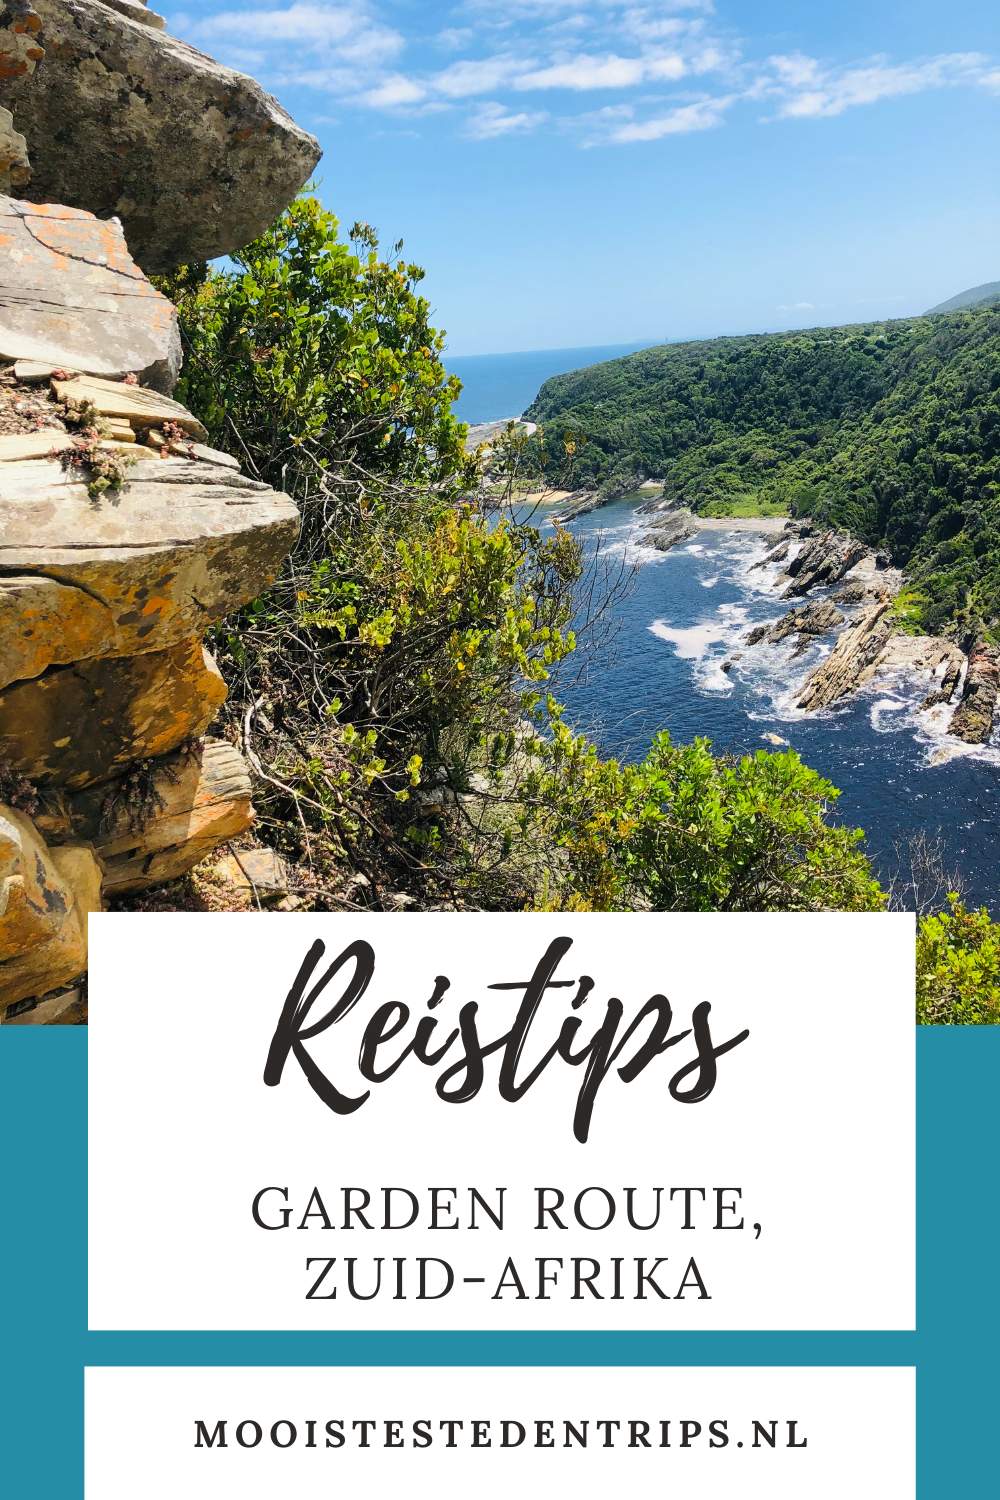 Tuinroute, Zuid-Afrika: tips voor je rondreis langs de Garden Route in Zuid-Afrika | Mooistestedentrips.nl